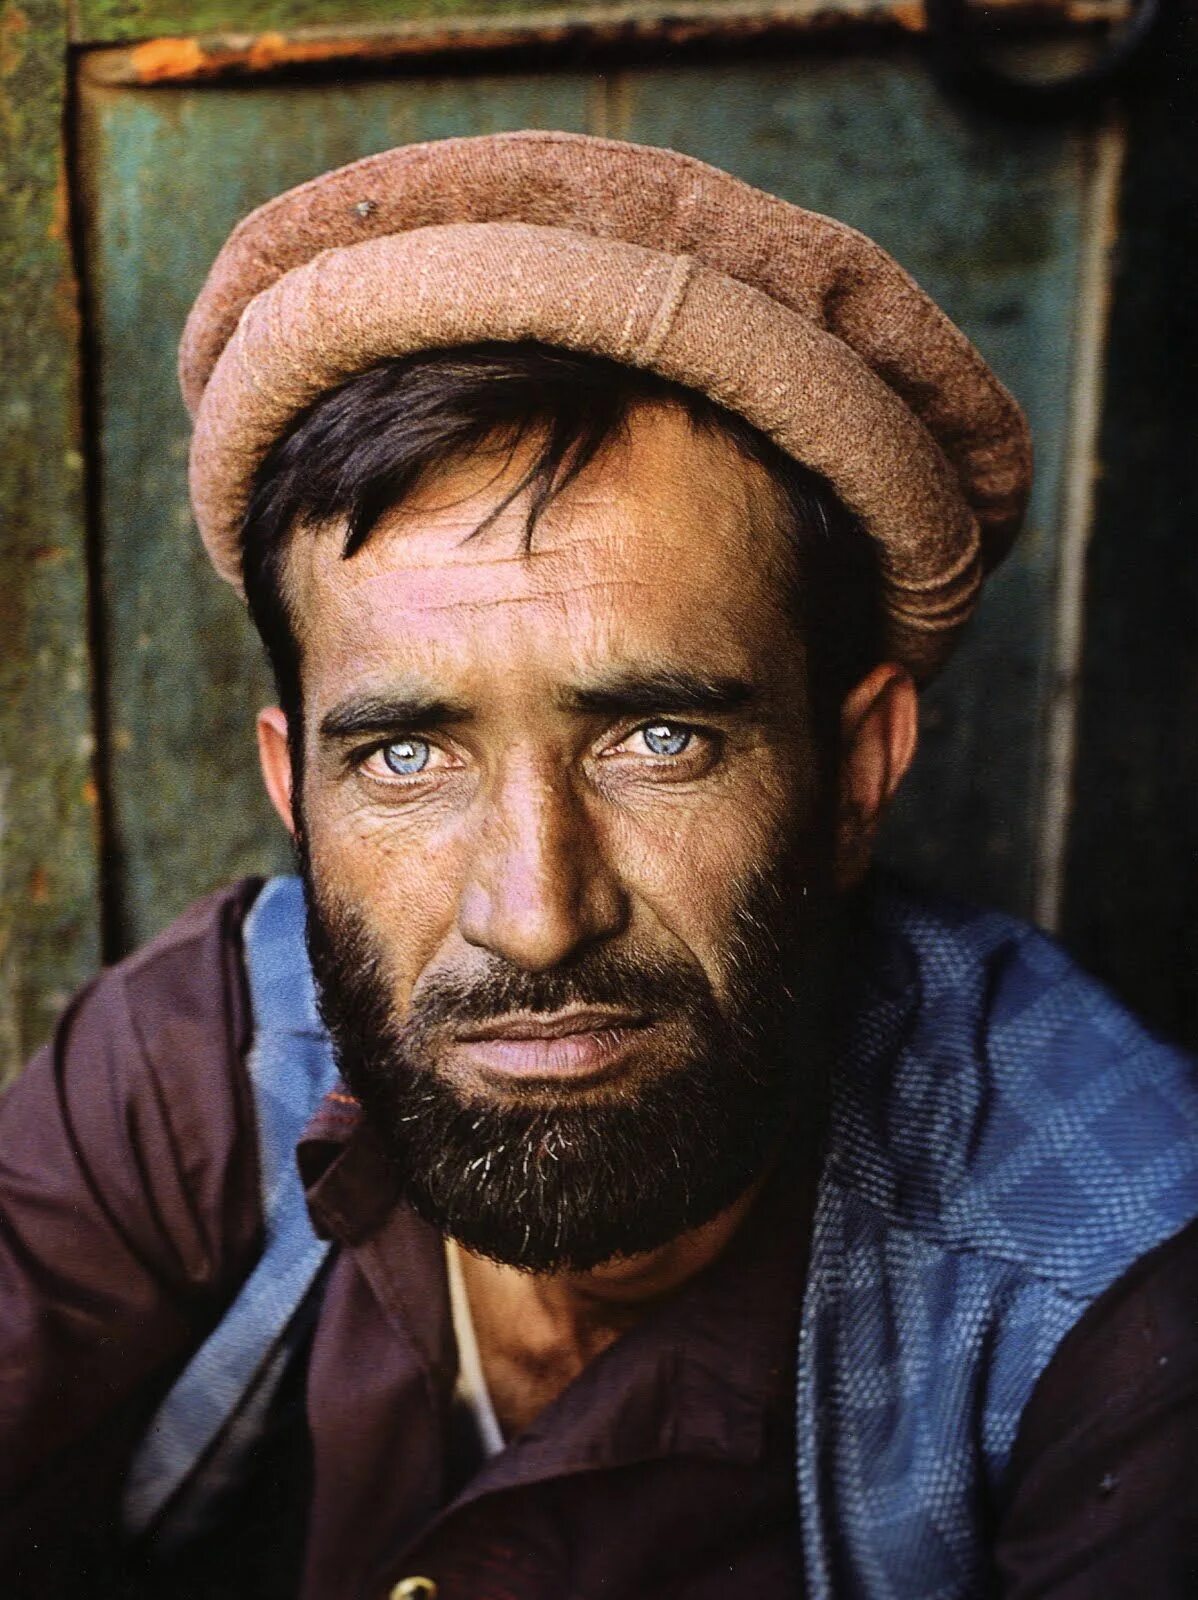 Таджик с глазом. Стив МАККАРРИ портреты. Стив МАККАРРИ (Steve MCCURRY) фотограф. Пуштуны Афганистана. Стив МАККАРРИ фотограф мужчины.